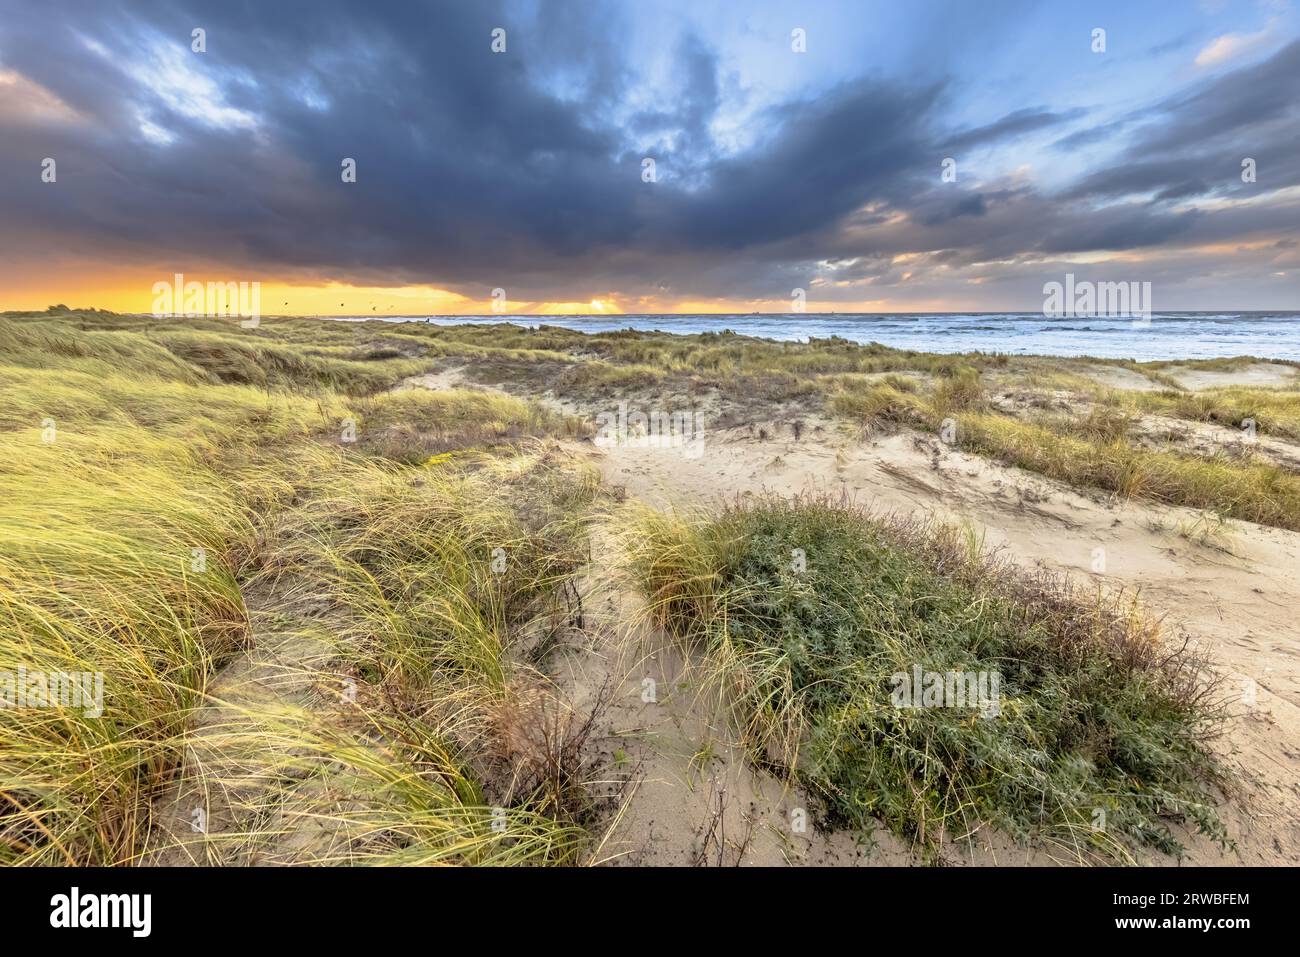 Dünenlandschaft unter bewölktem Herbsthimmel. Dunkle Wolken, die über der untergehenden Sonne wehen. Wijk aan Zee, Nordholland. Niederlande. Meereslandschaft der Natur Stockfoto